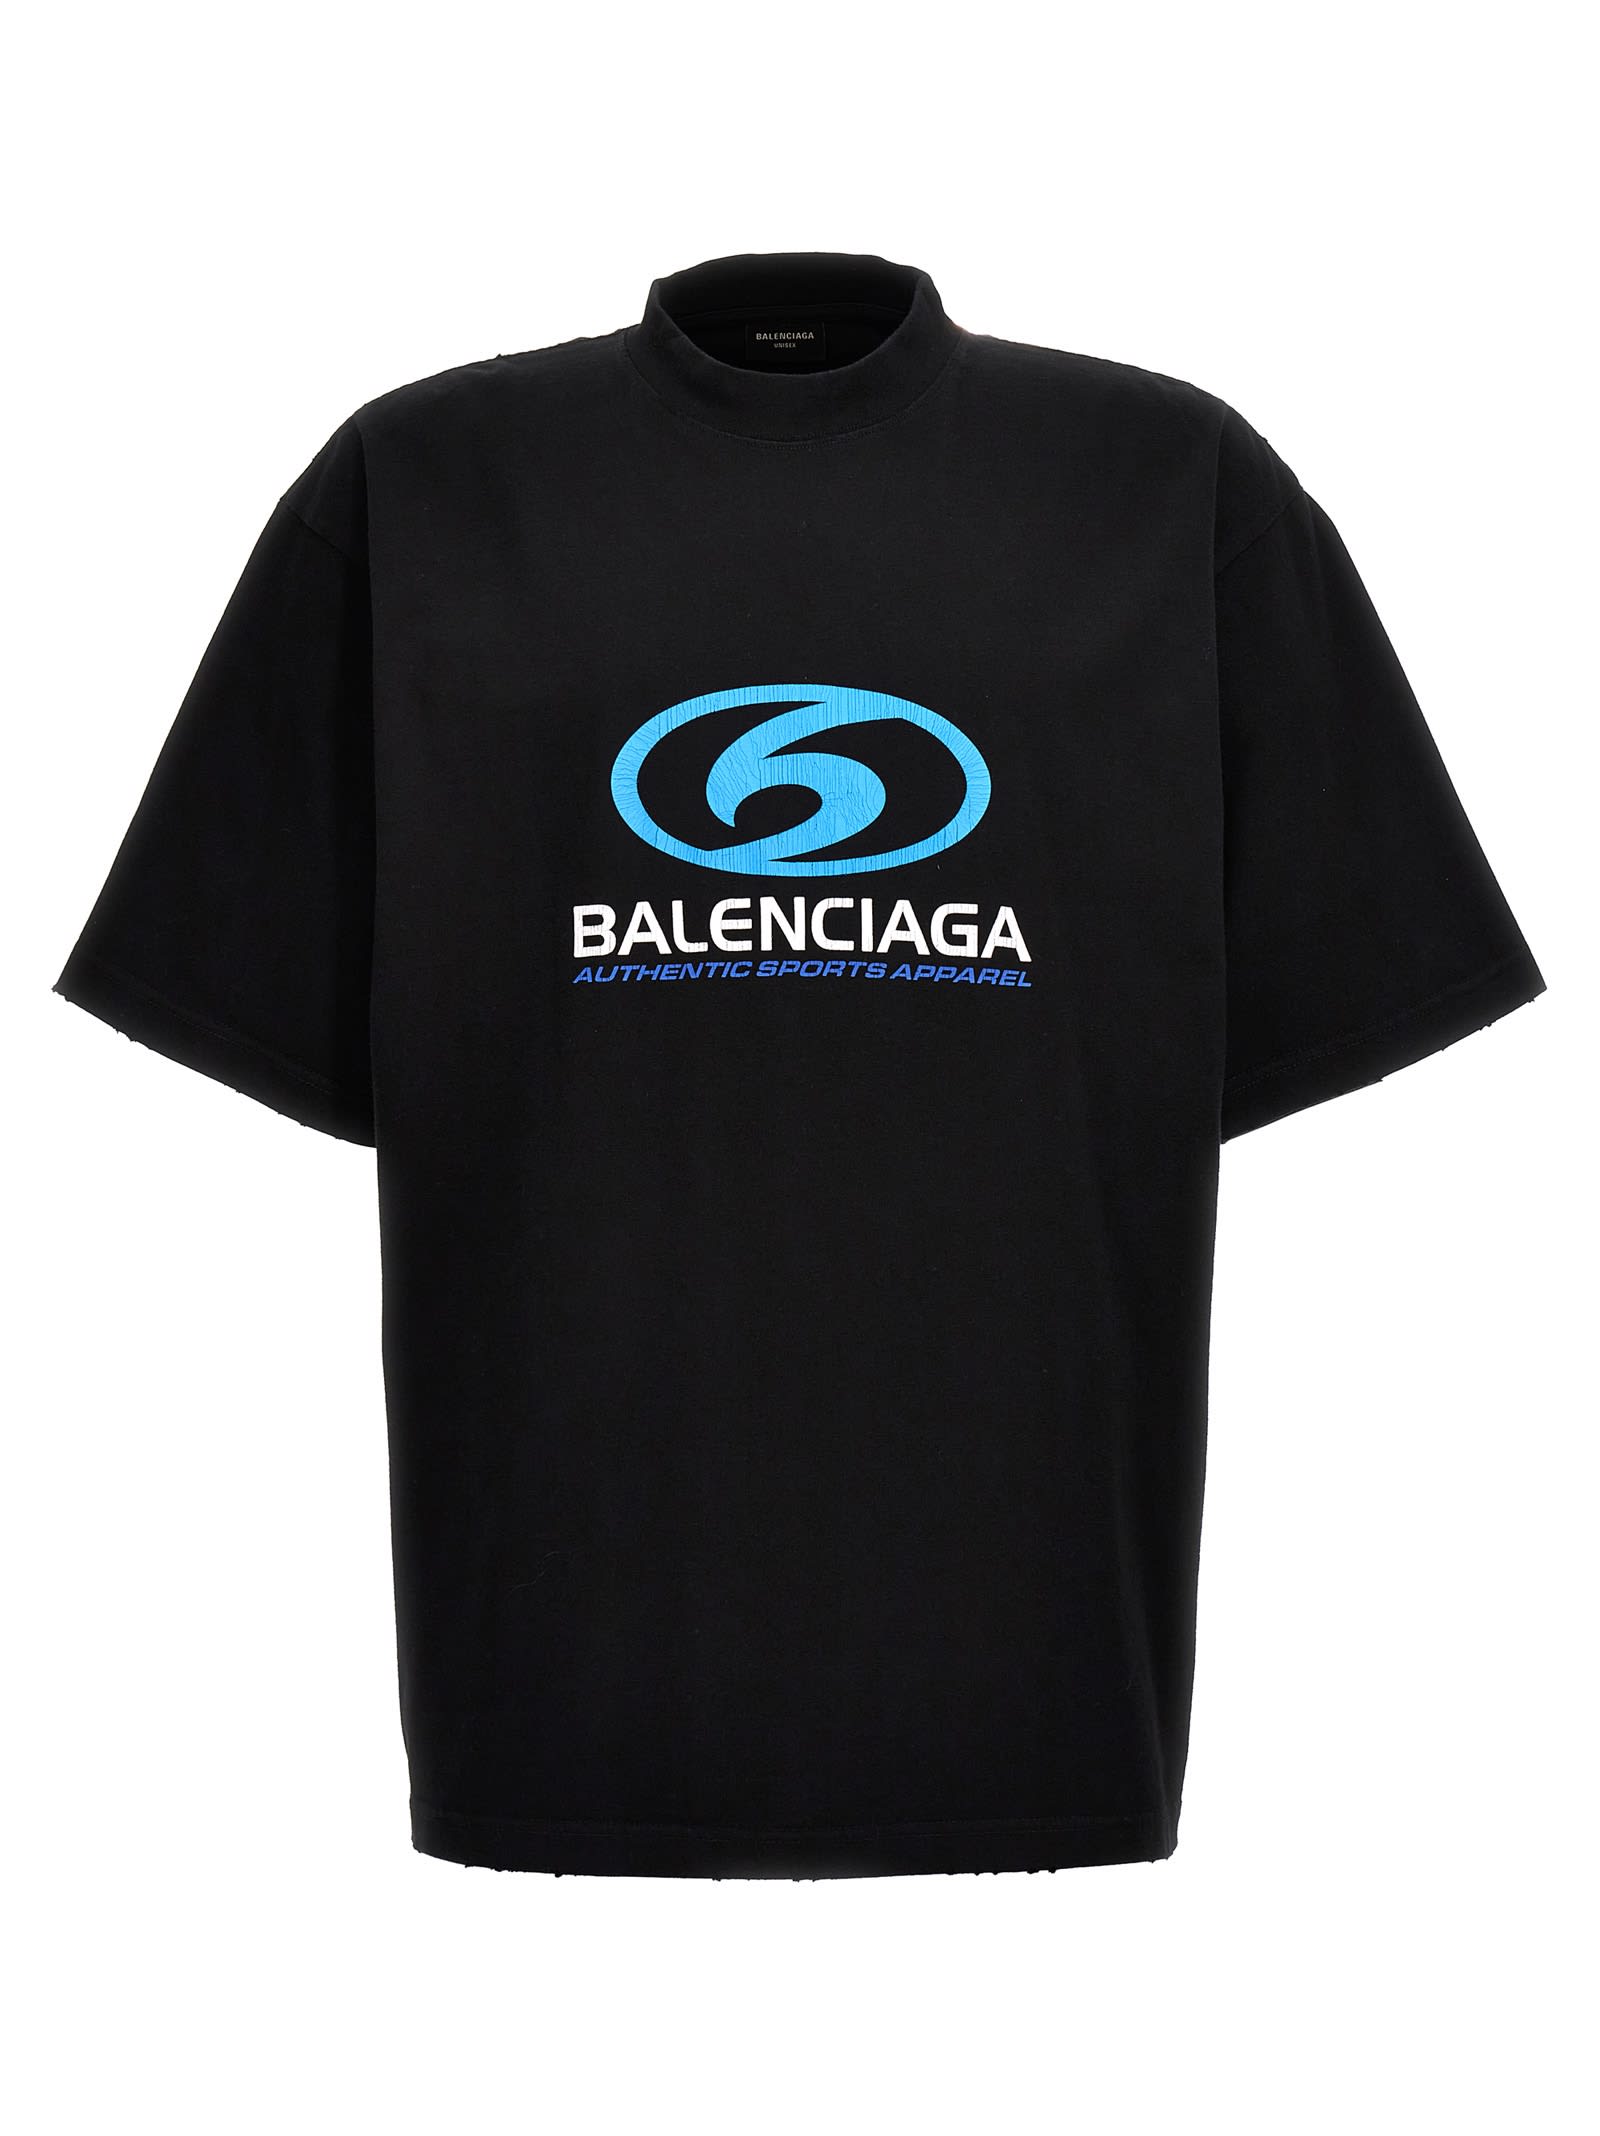 BALENCIAGA SURFER T-SHIRT